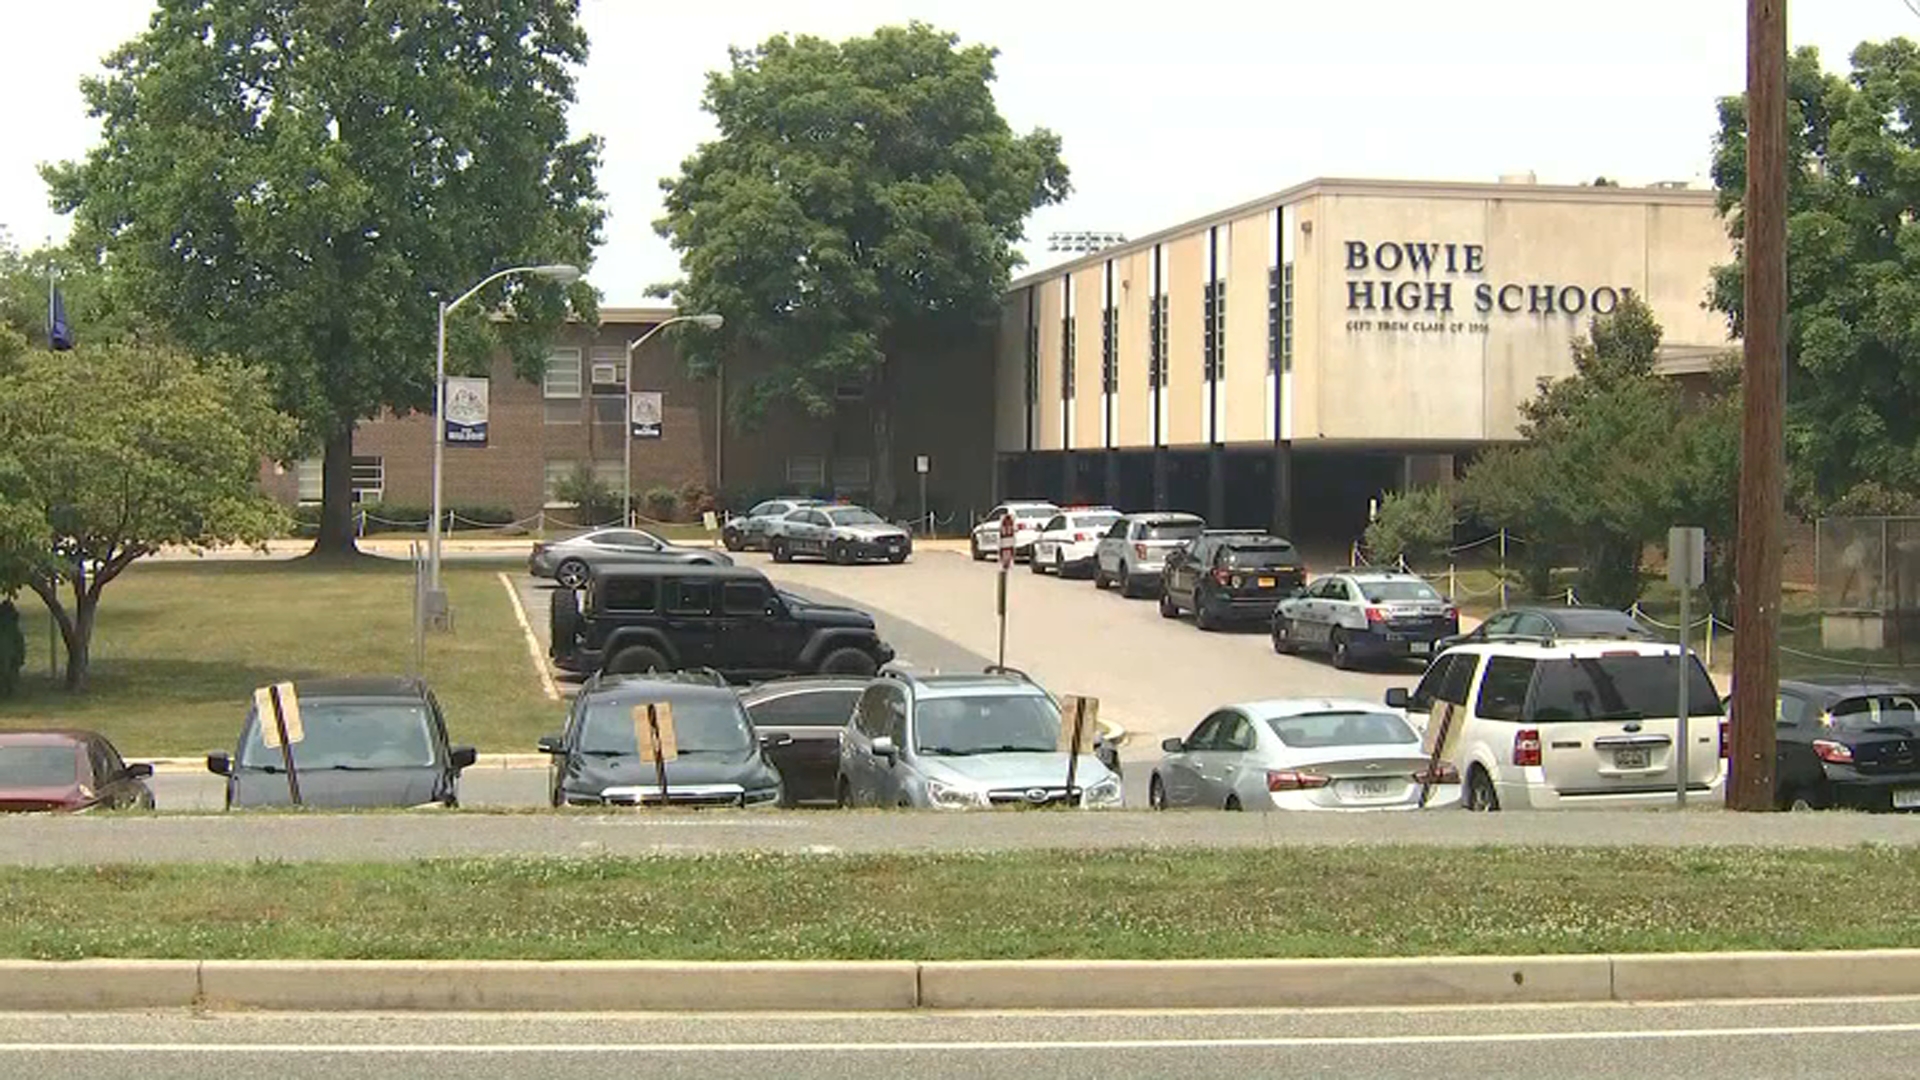 High school locked down due to boy with airsoft gun, police say – NBC4 Washington